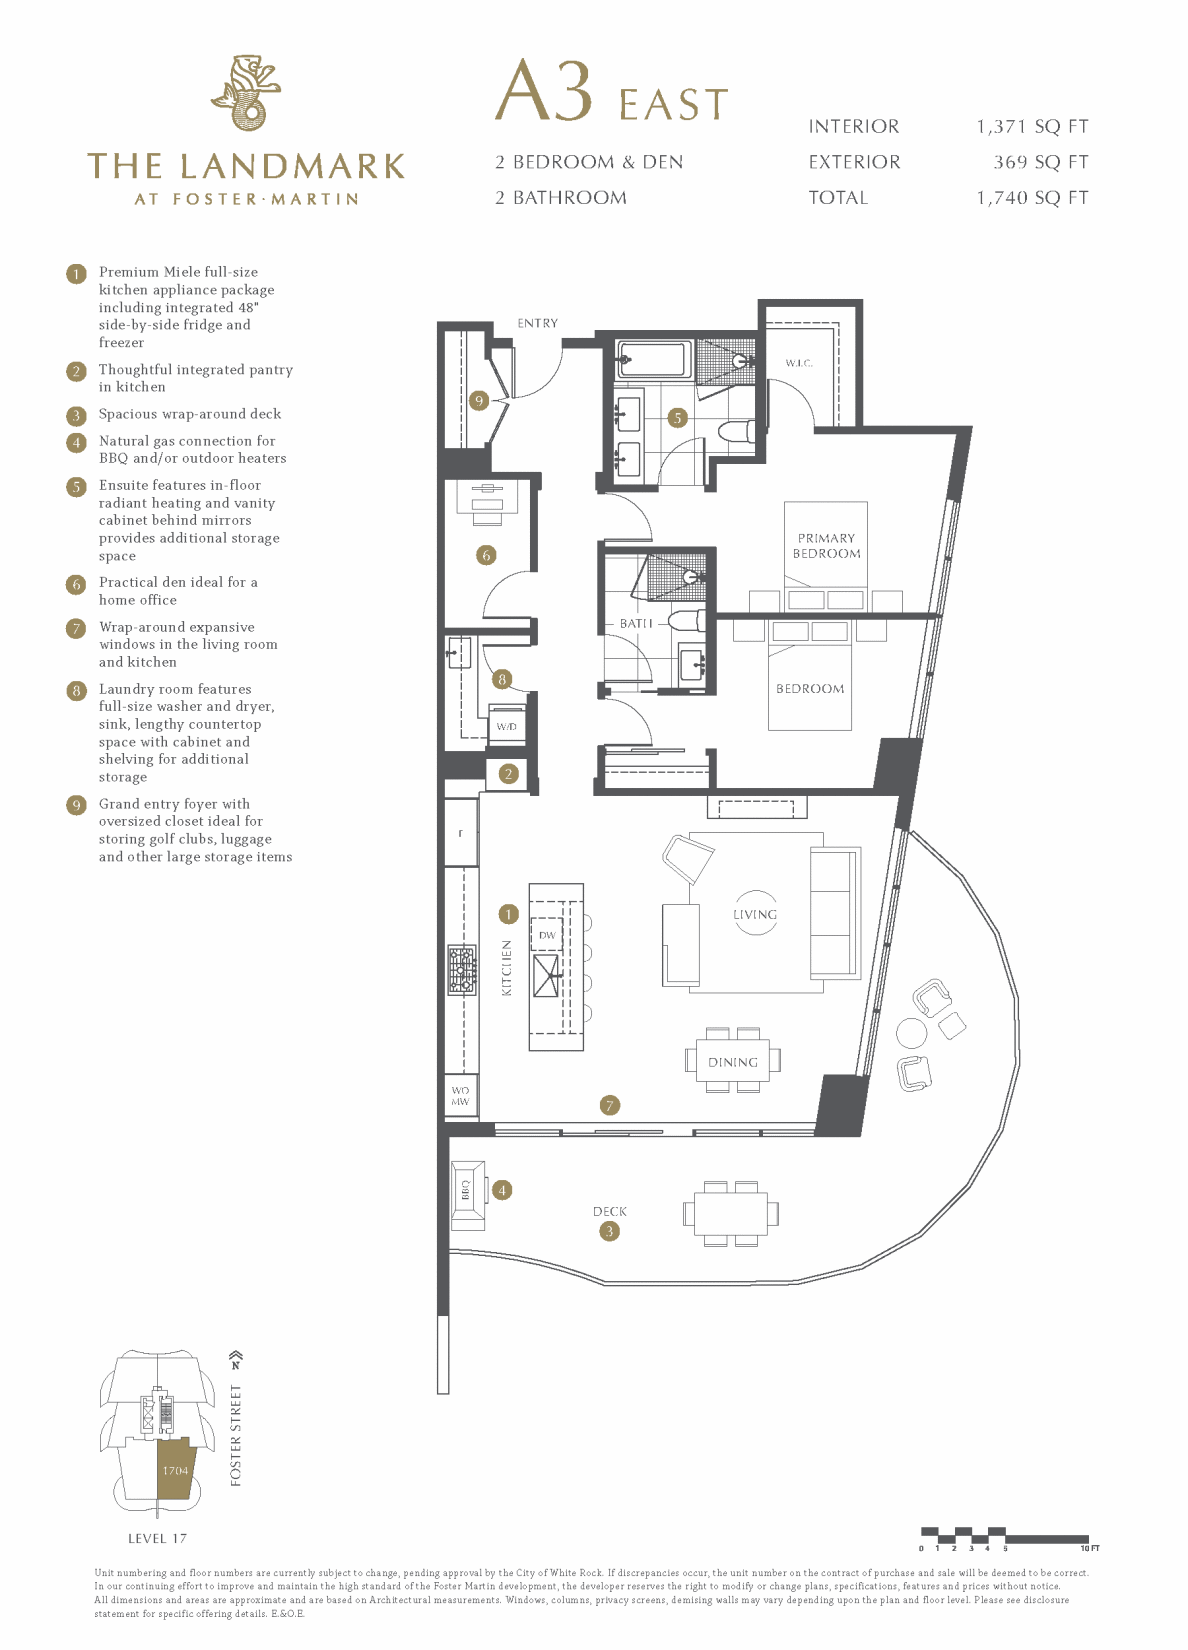 The Landmark Floor Plan A3 E